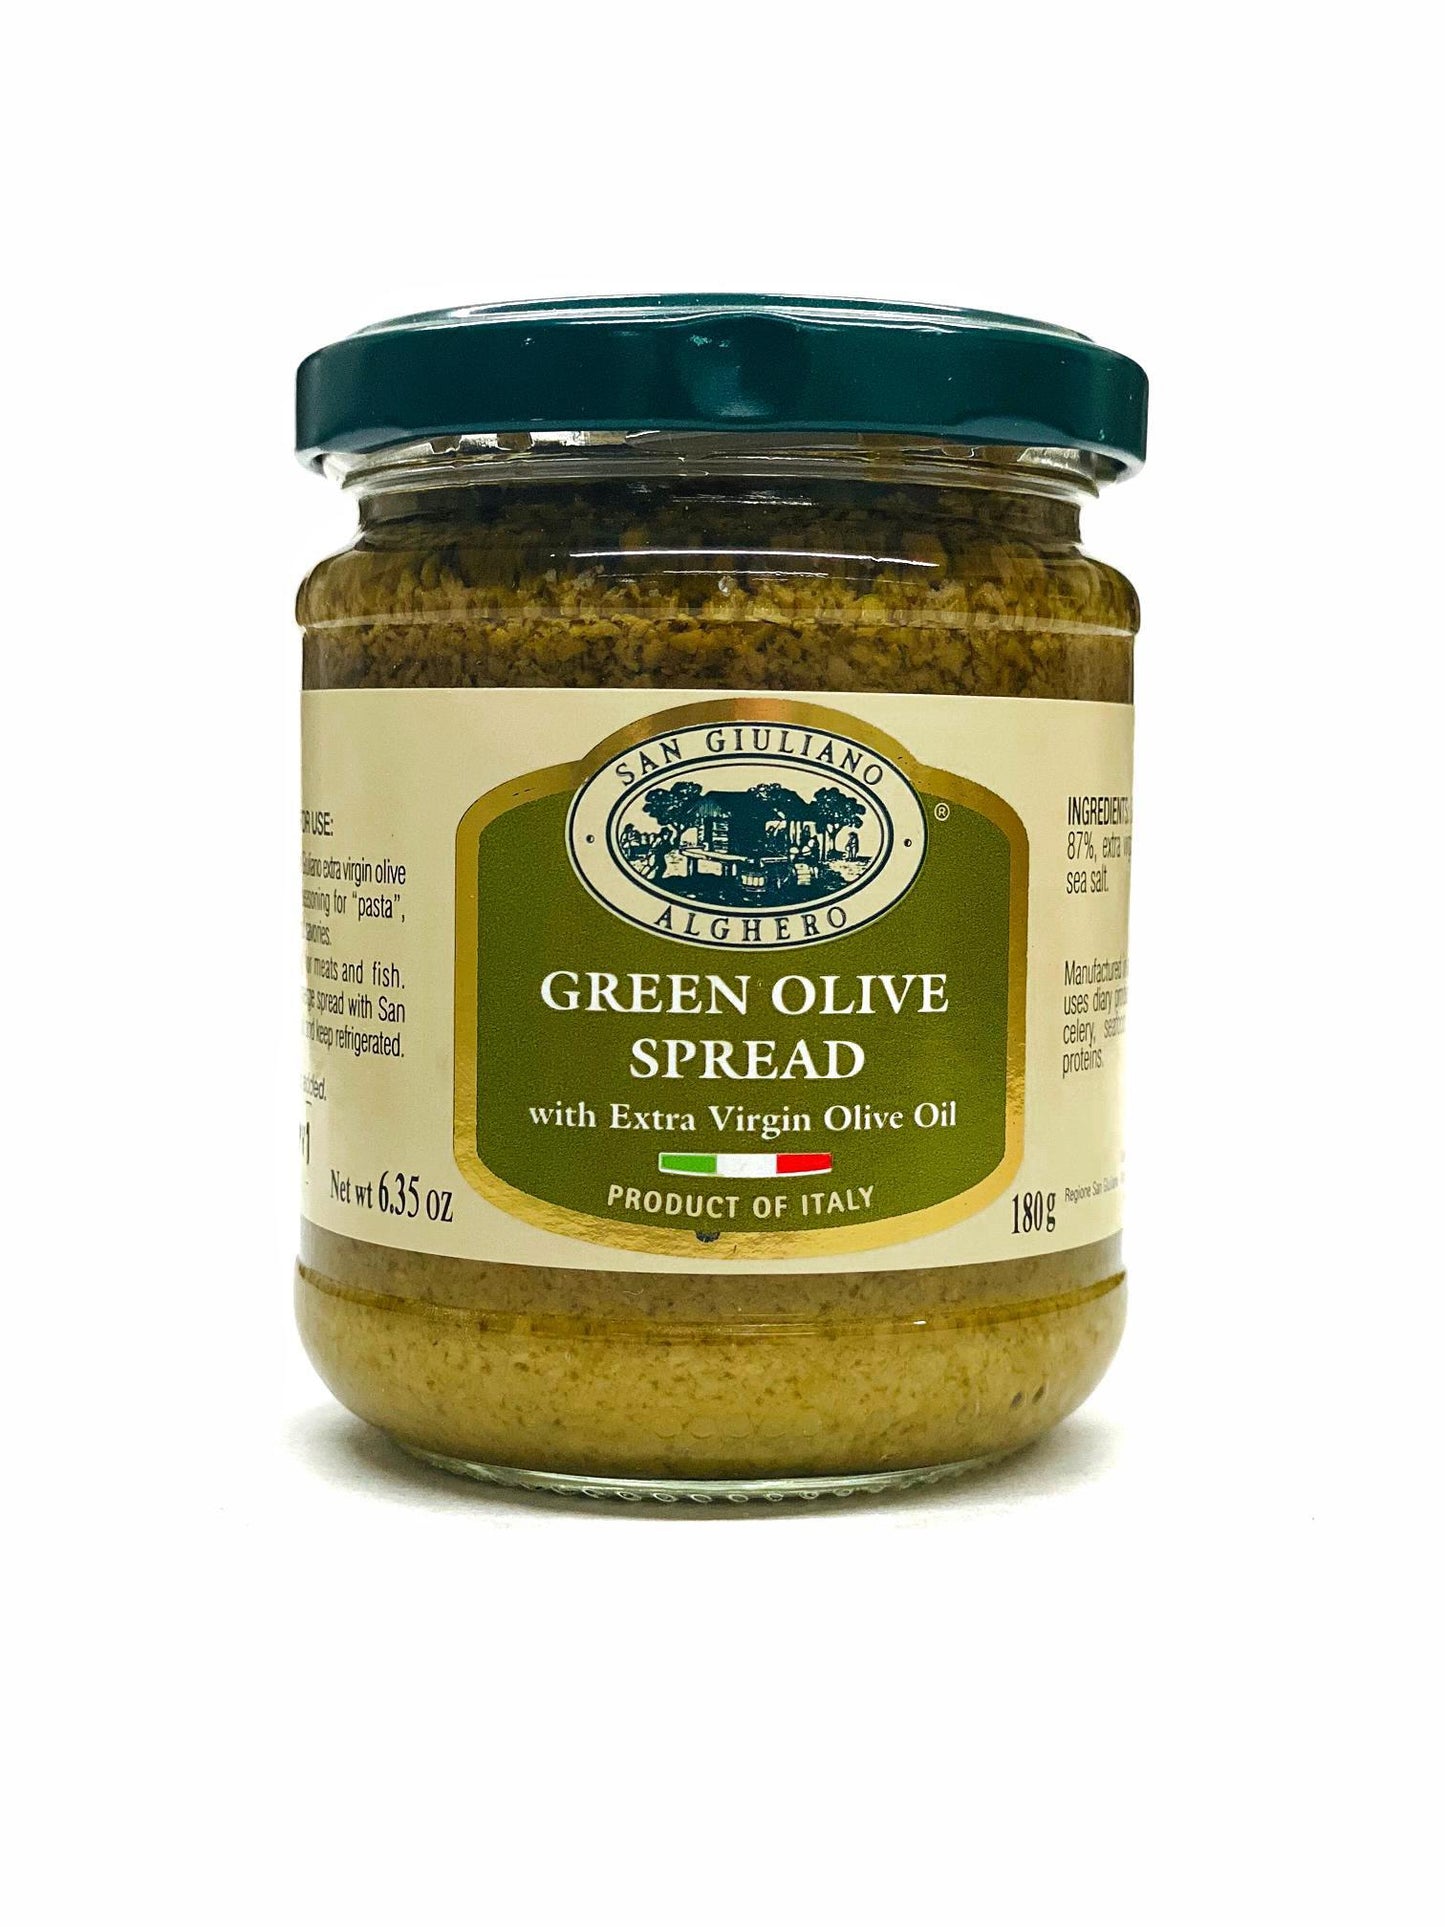 San Giuliano Alghero Green Olive Spread, 6.5 oz